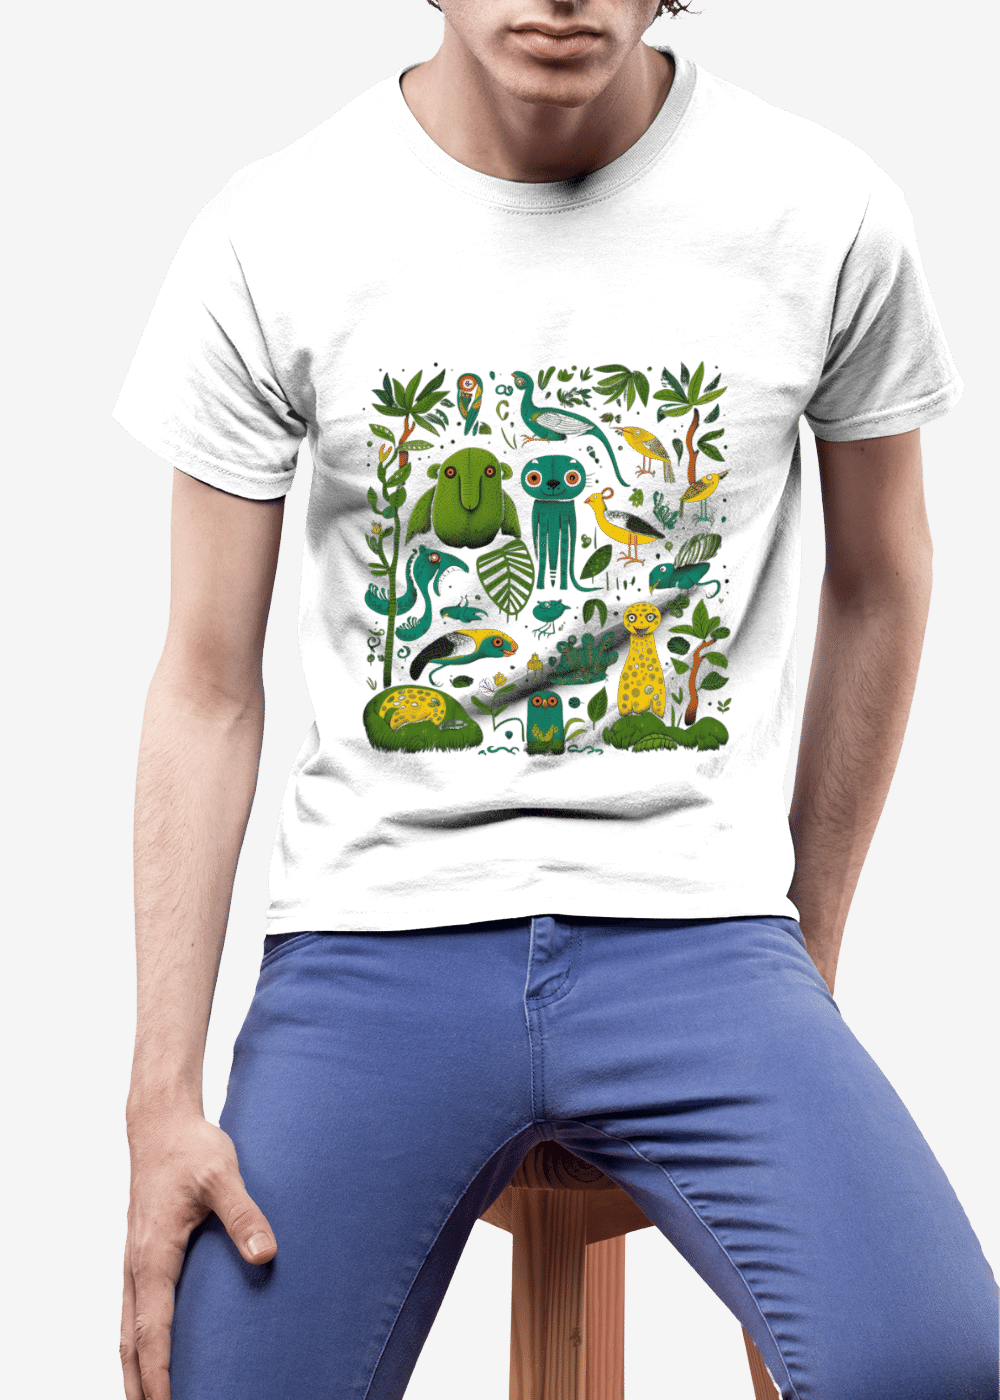 Amazon Rain Forest Animals - Men Graphic T Shirt